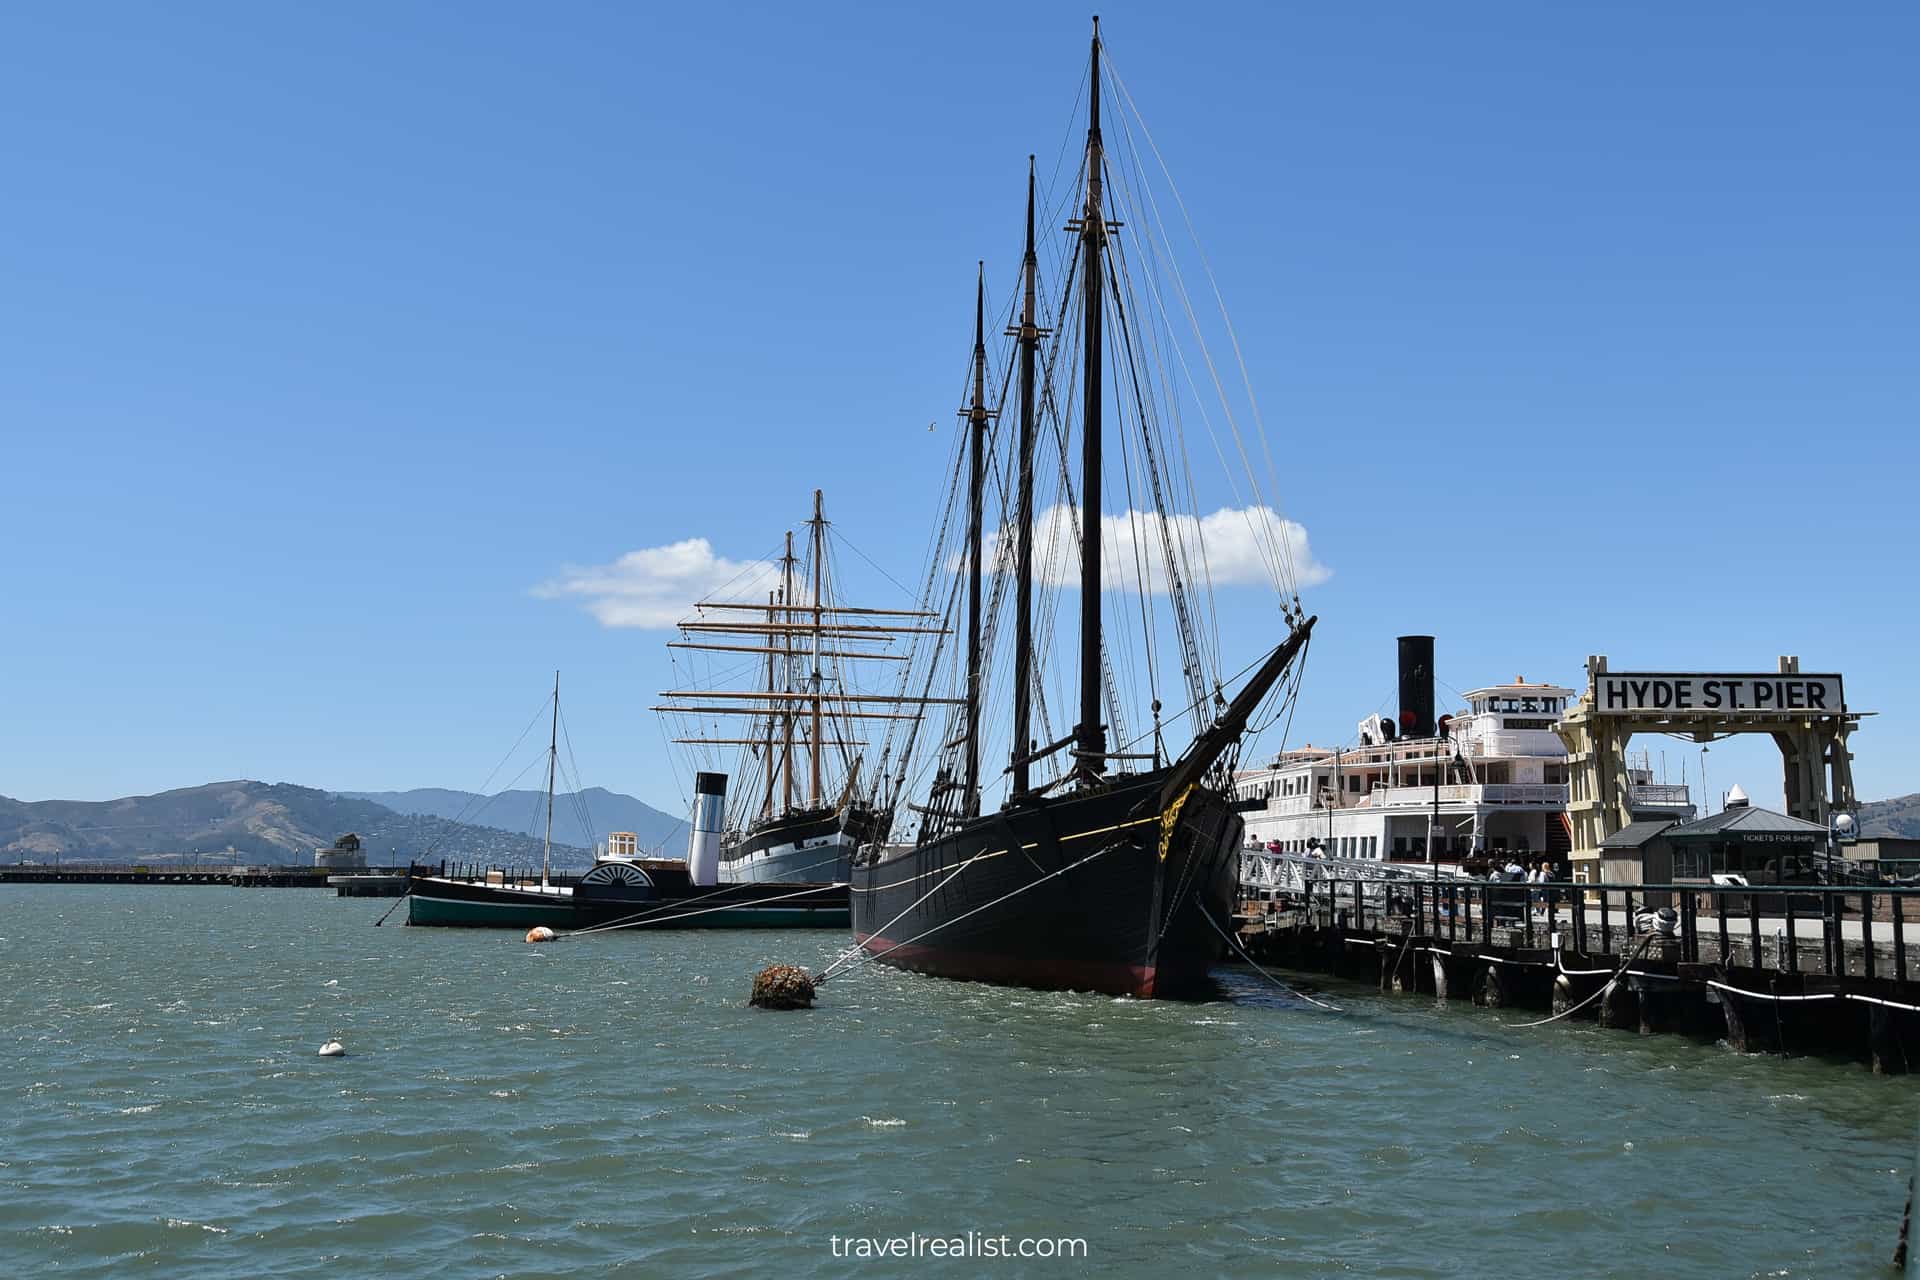 Lumber schooner C.A. Thayer, Paddlewheel tug Eppleton Hall, and Square rig sailing ship Balclutha at Hyde Pier in San Francisco, California, US